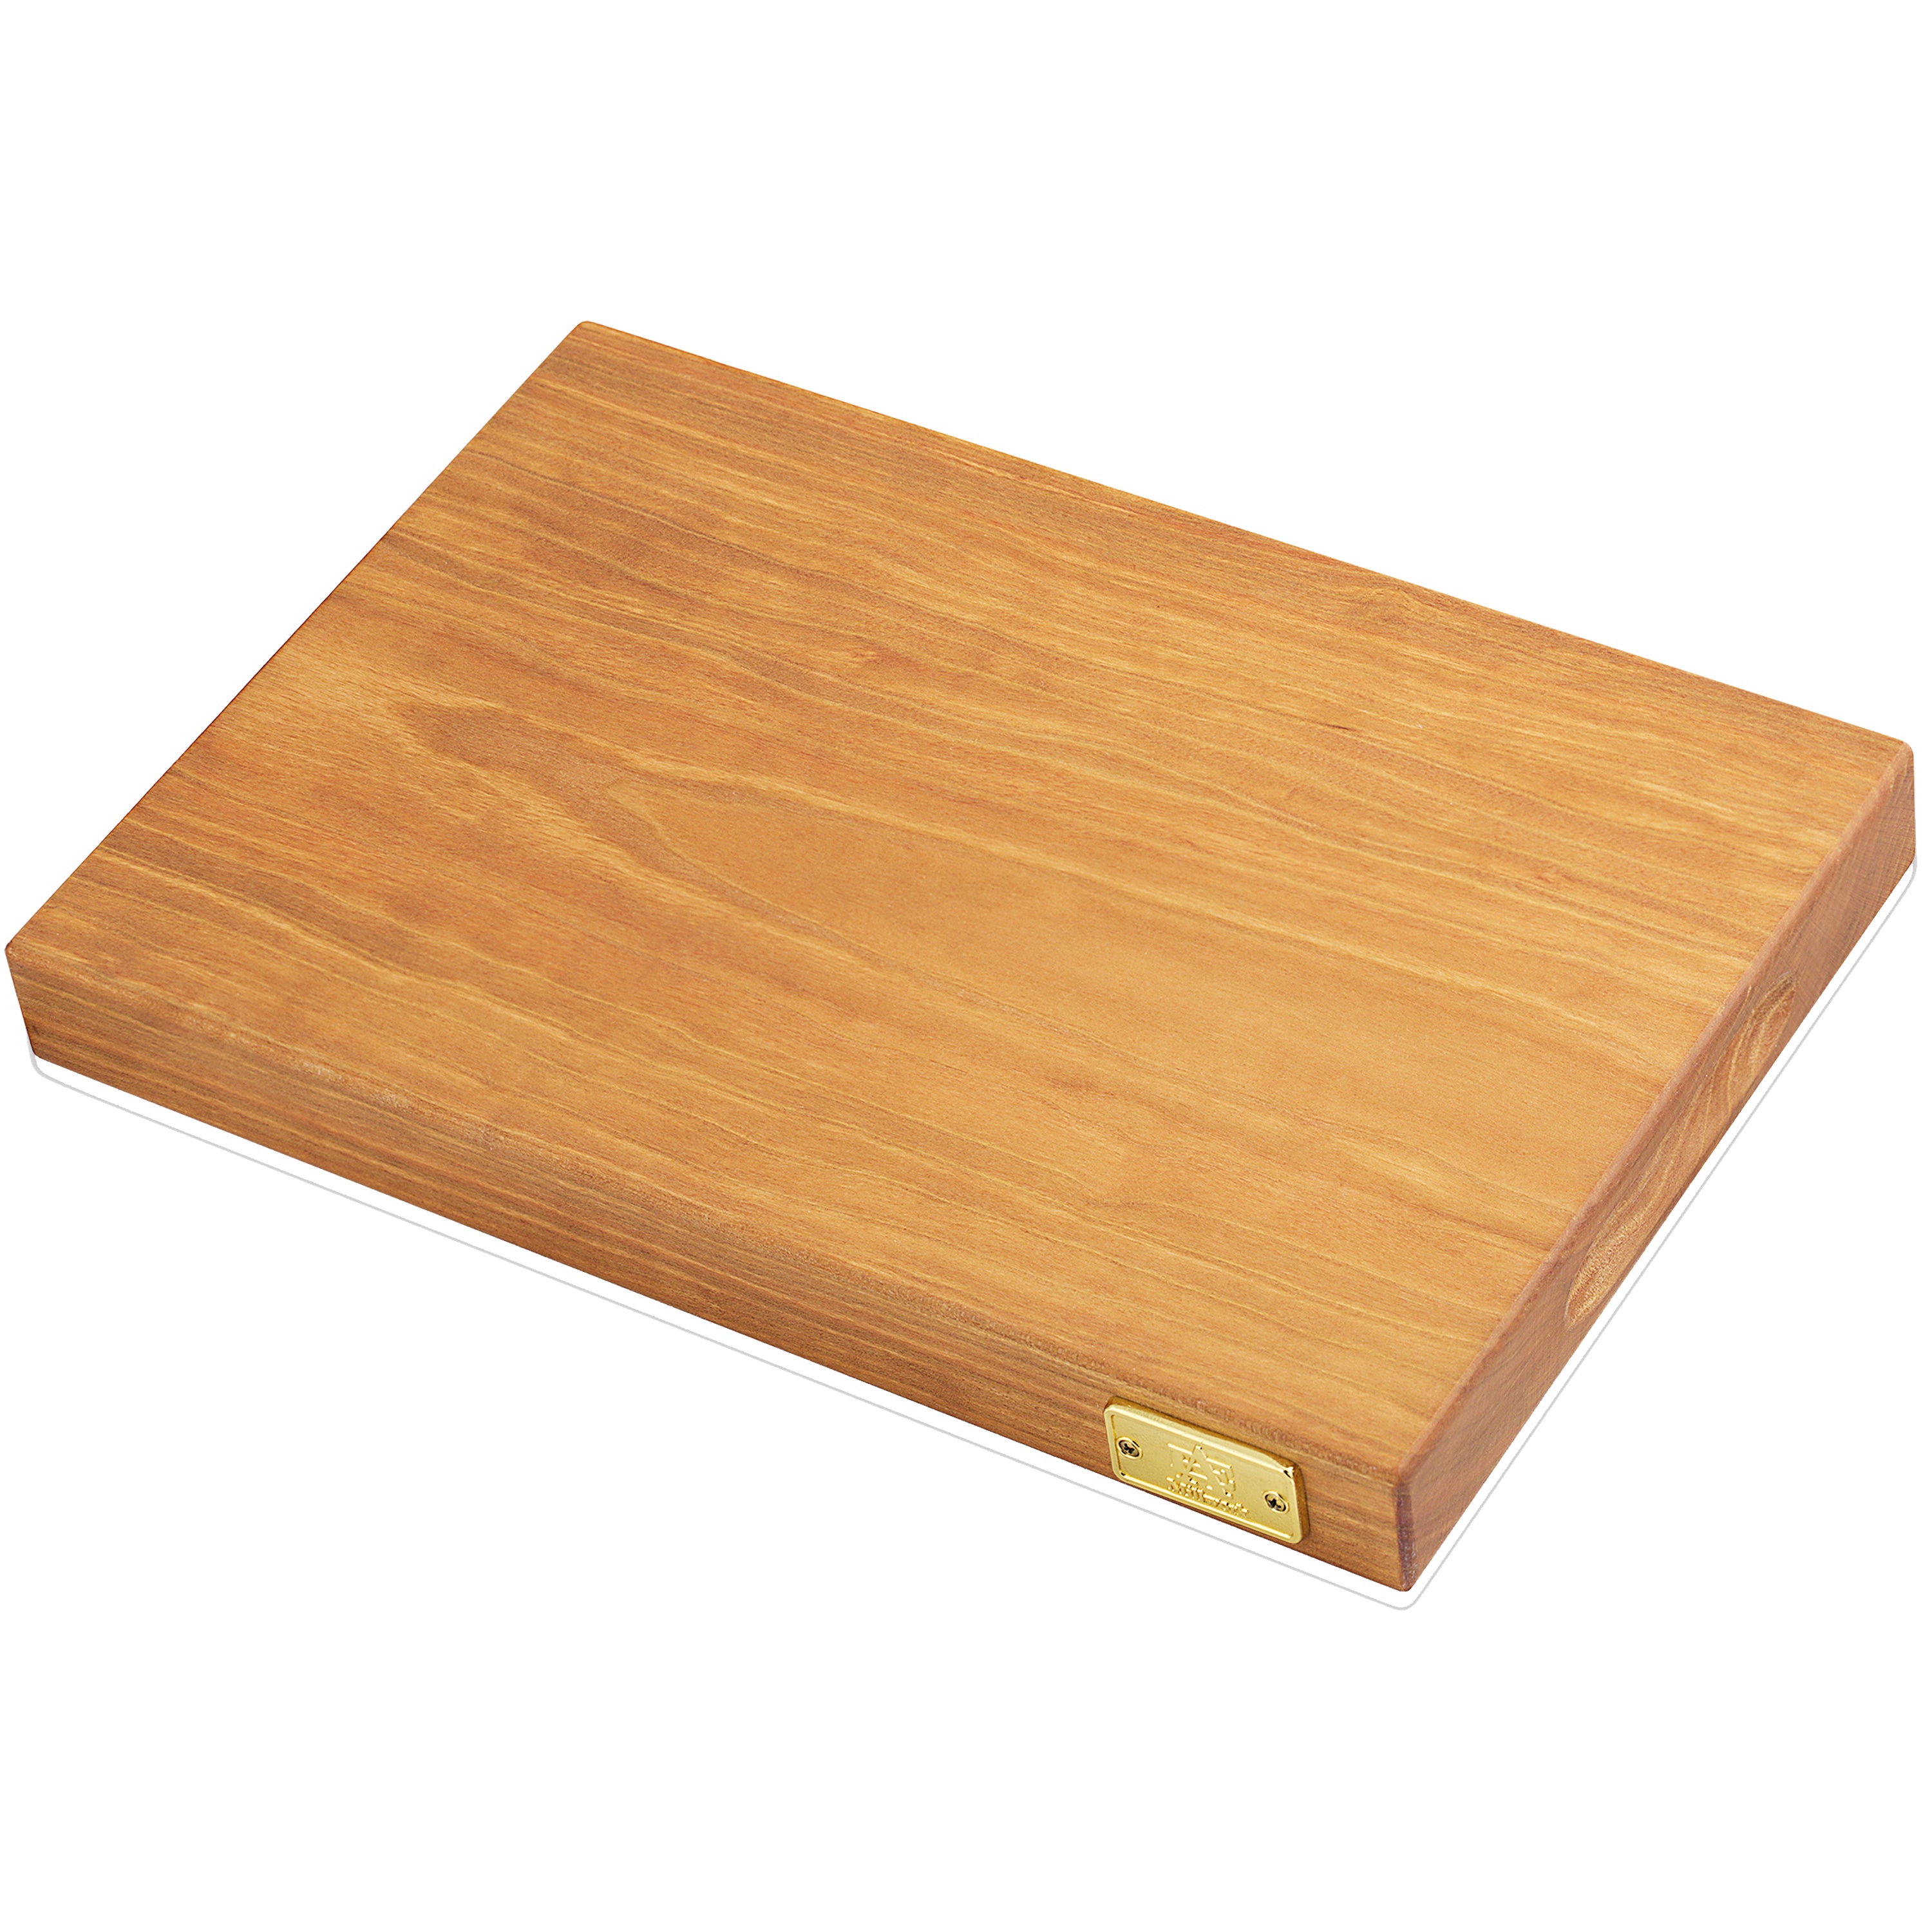 Edge Grain Cutting Board - Classic Cherry – Nox Woodcraft